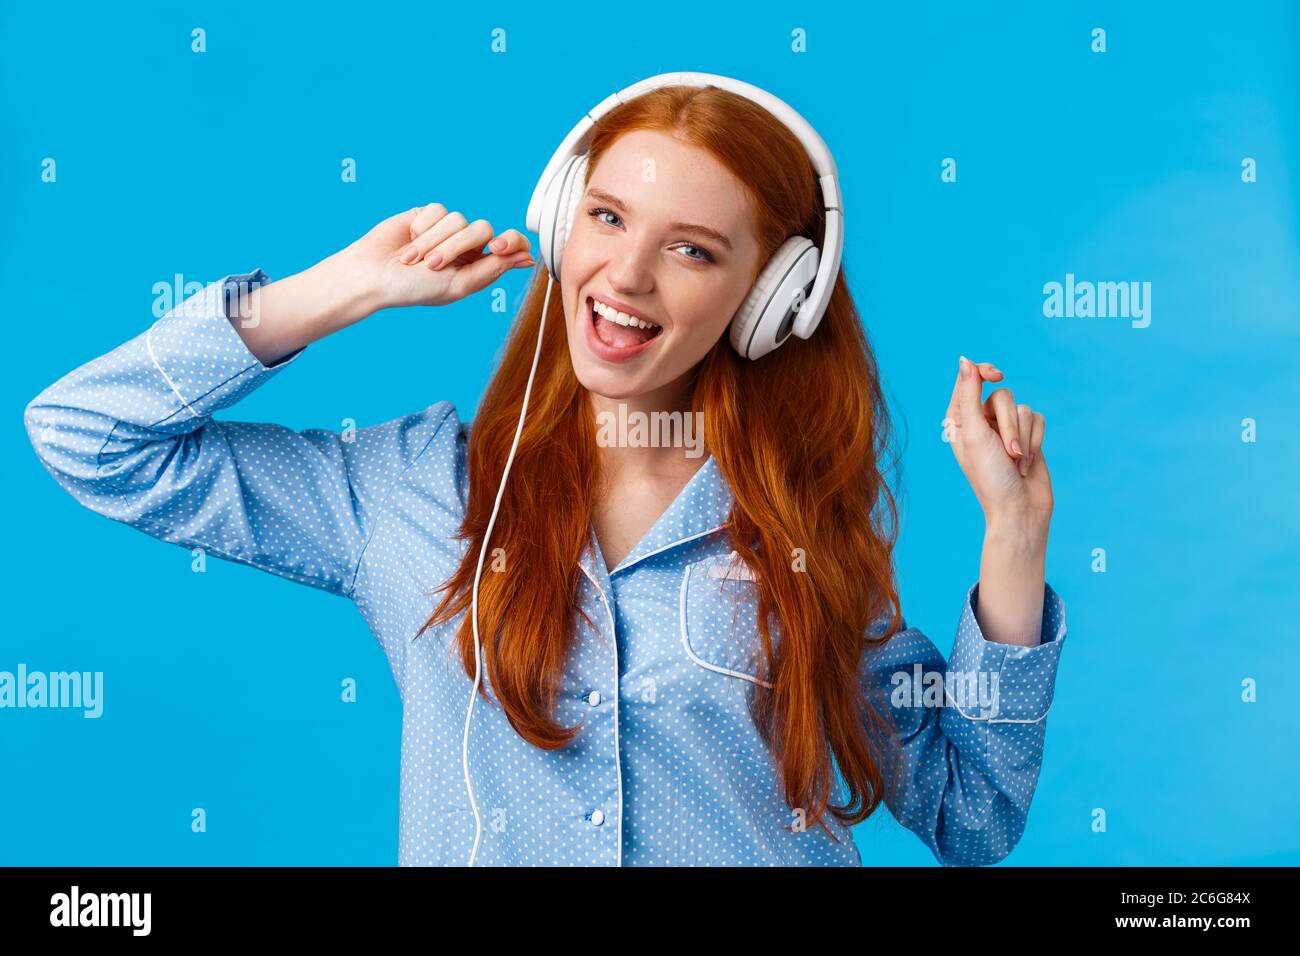 Girl waking up starting day with music. Joyful carefree redhead teenager dancing in nightwear, raising hands up wearing large white headphones singing Stock Photo